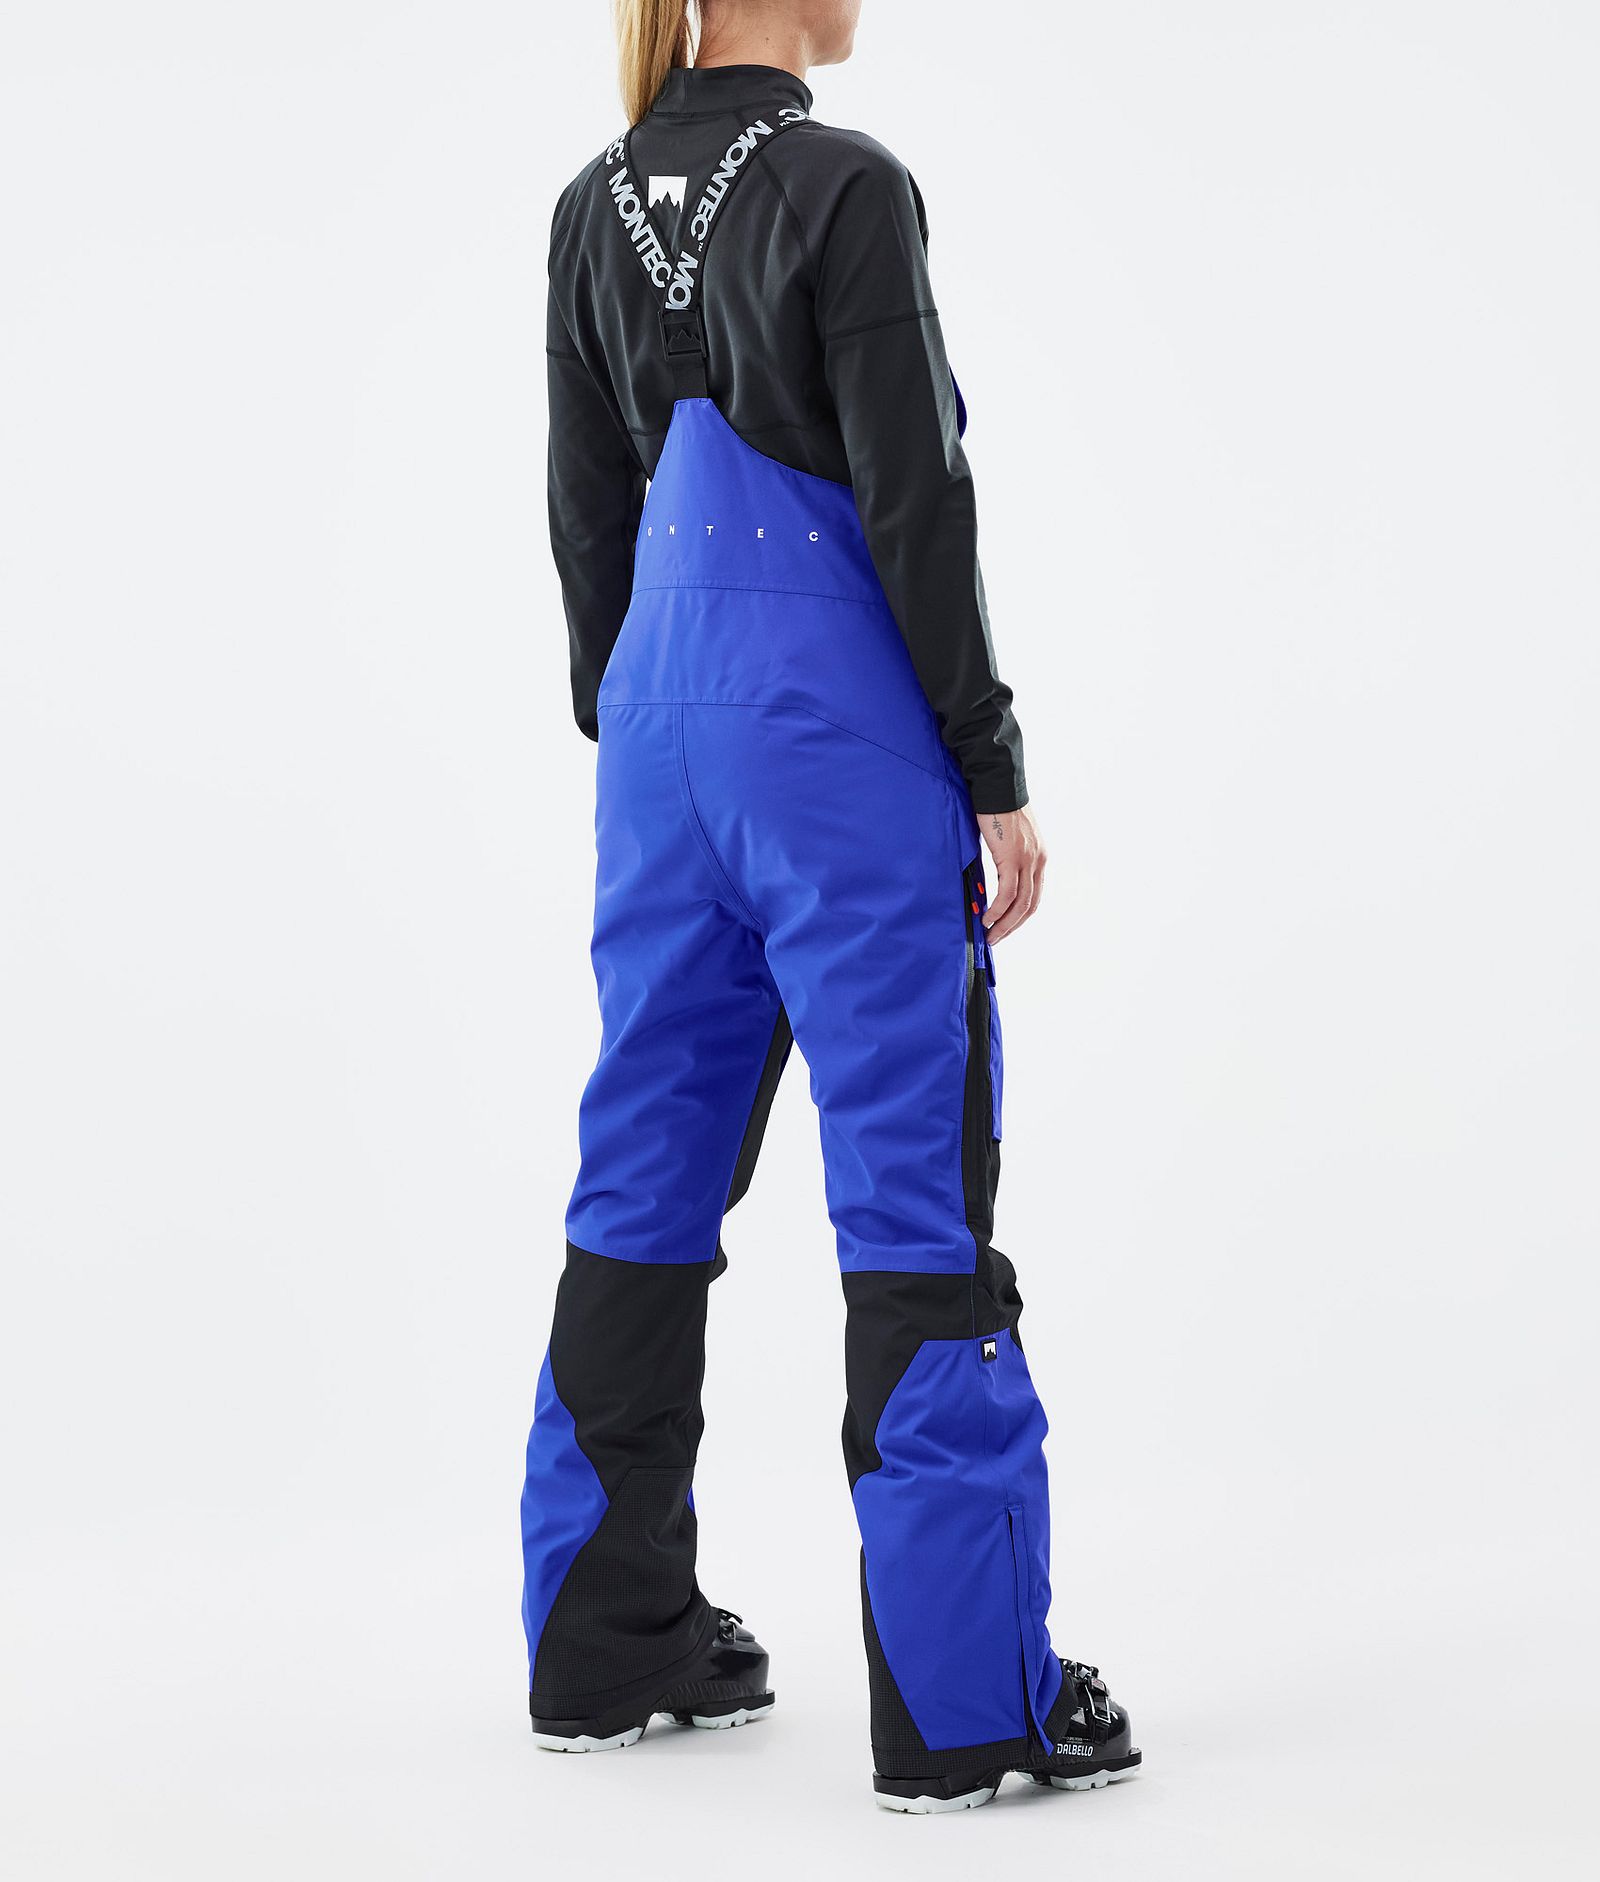 Montec Fawk W Pantalones Esquí Mujer Cobalt Blue/Black